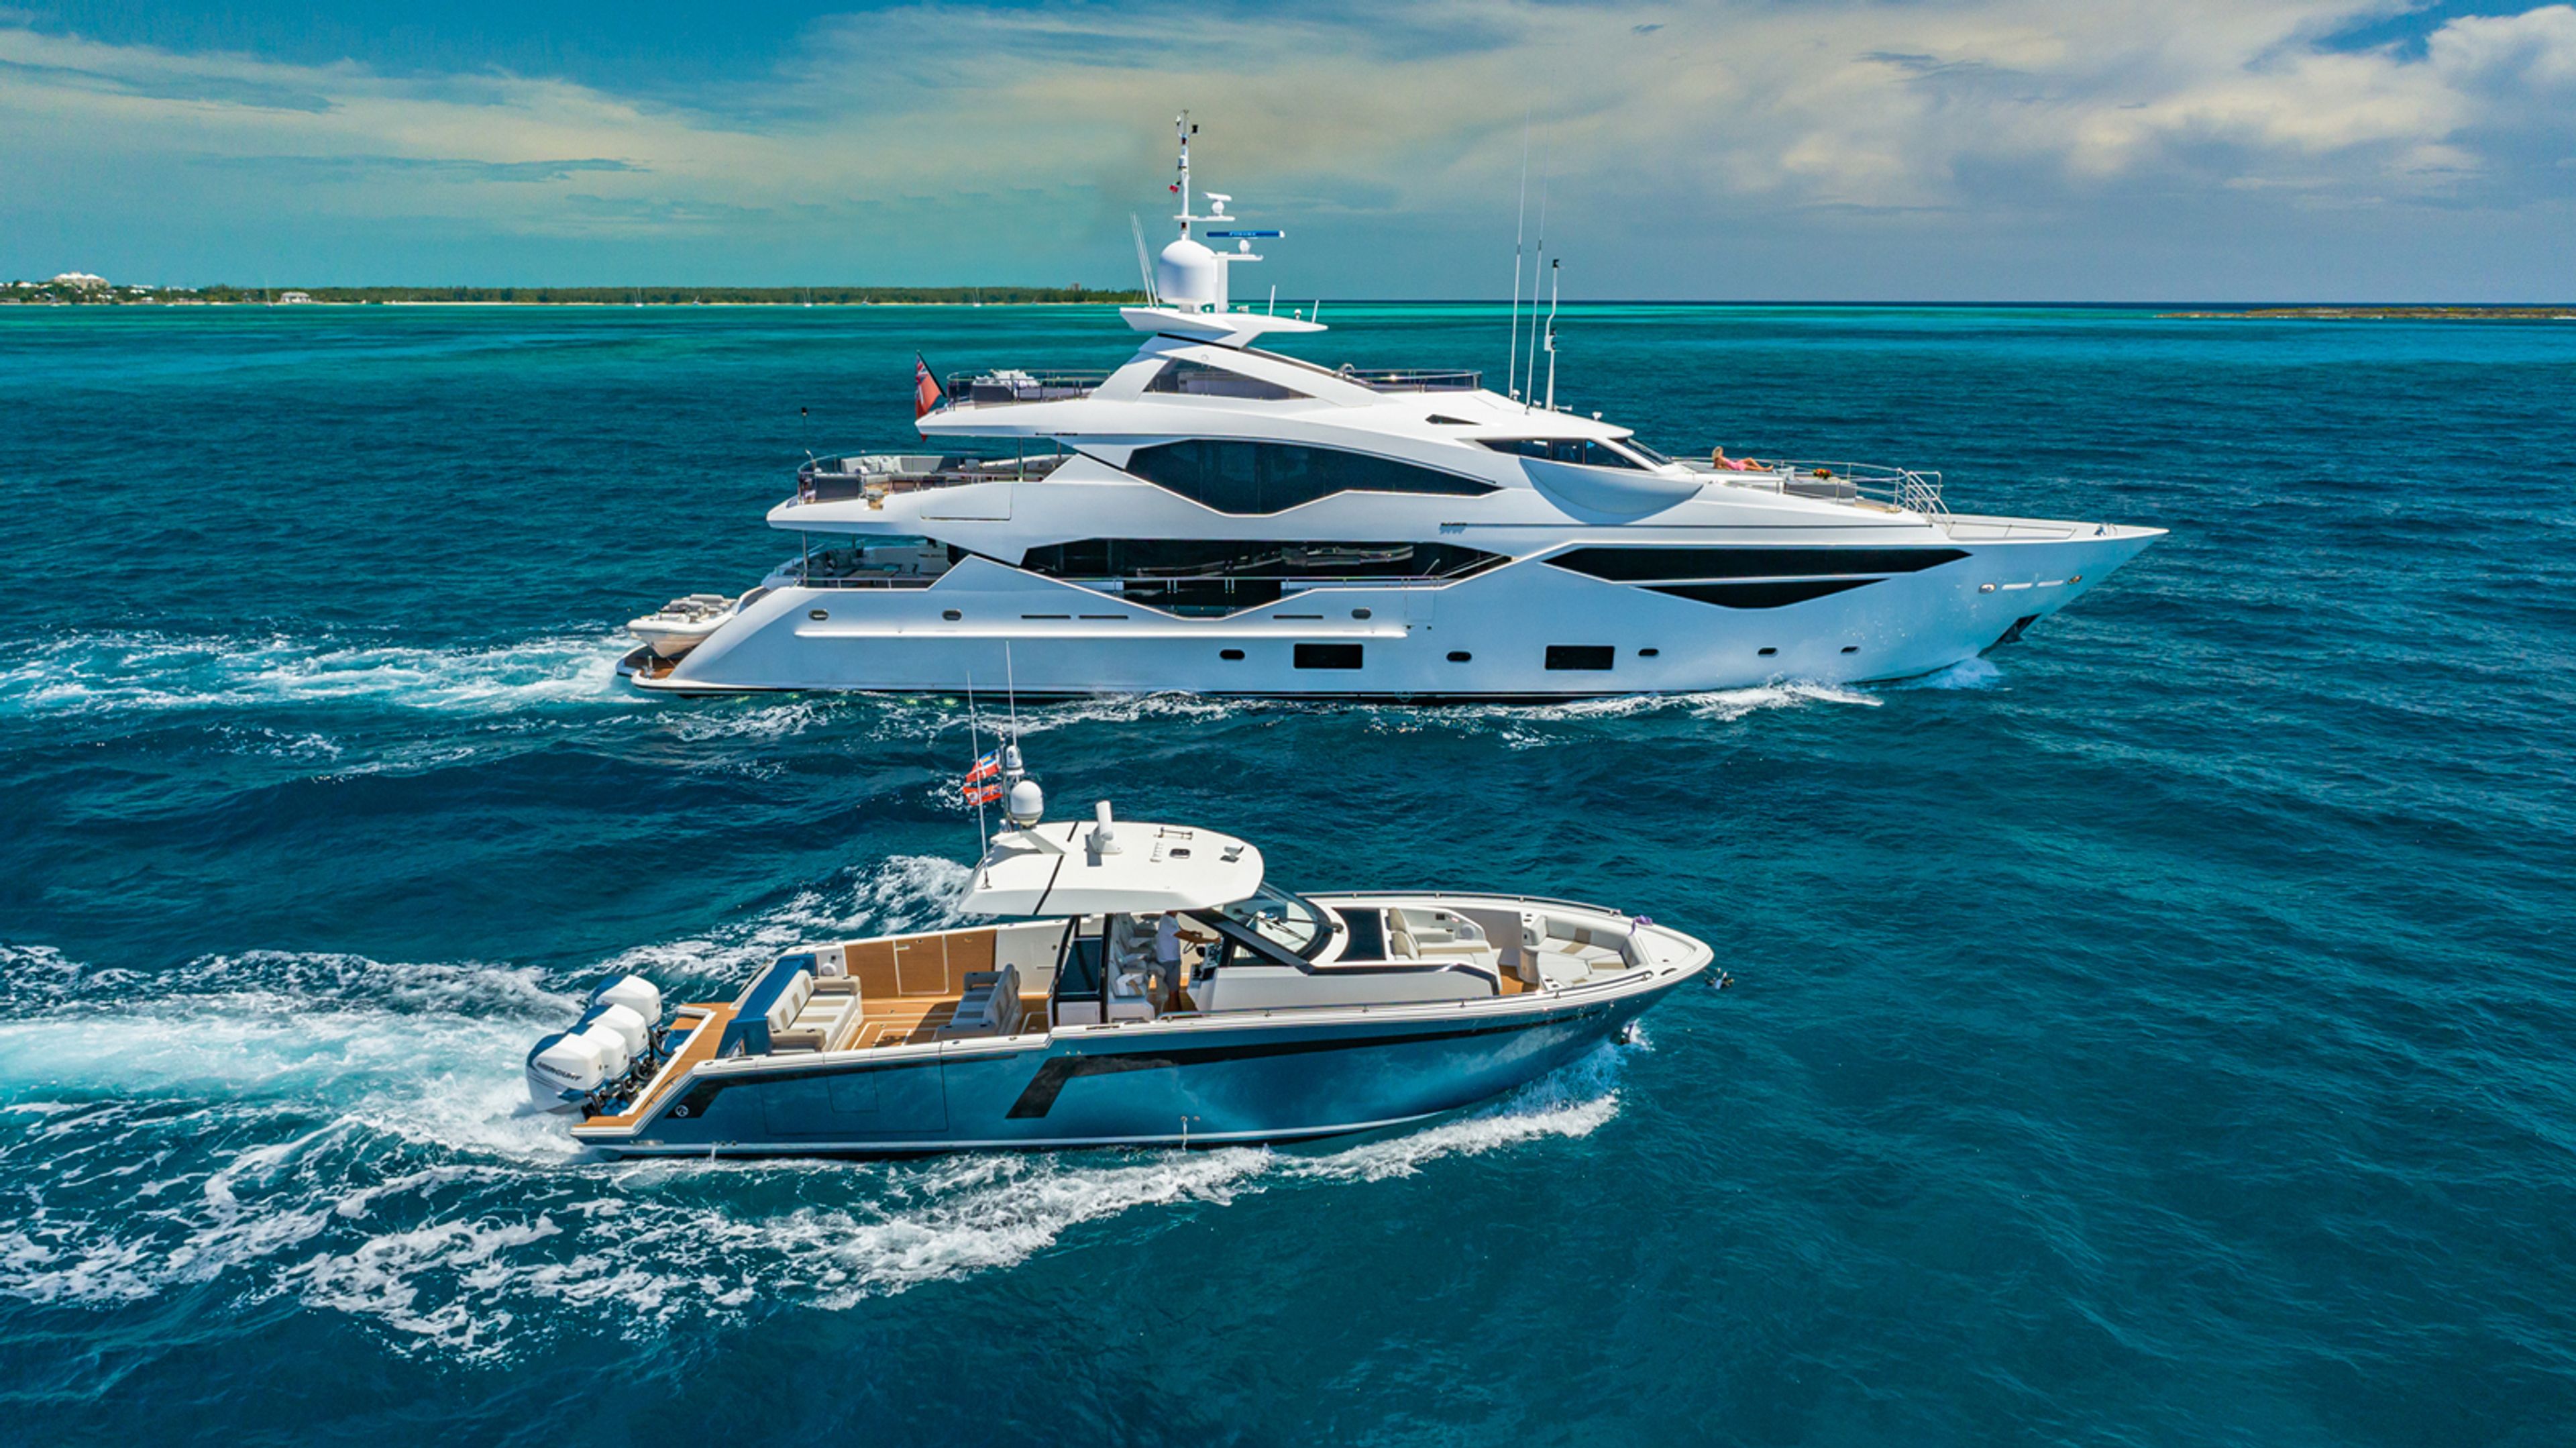 BLUE INFINITY ONE Yacht Charter Price - Sunseeker Luxury Yacht Charter